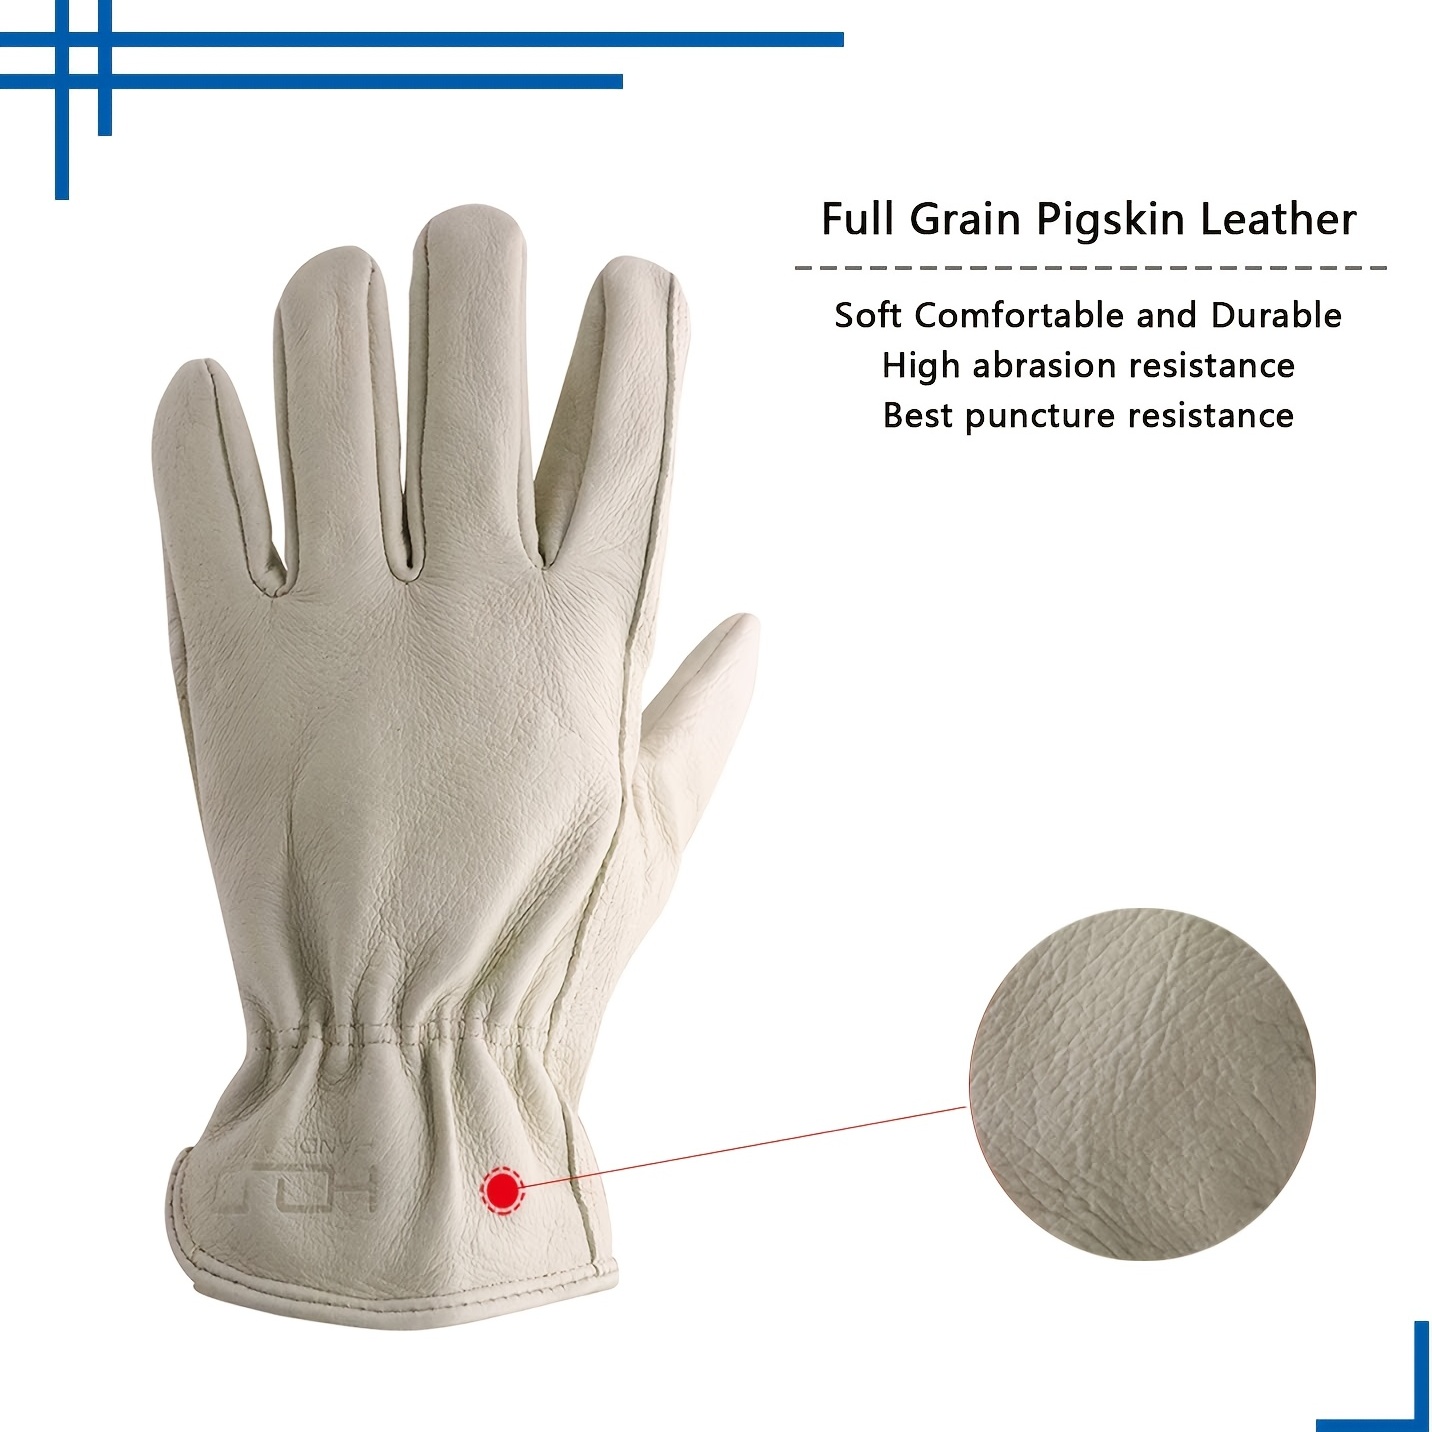 Top Grain Leather Work Gloves for Men and Women - Gardening